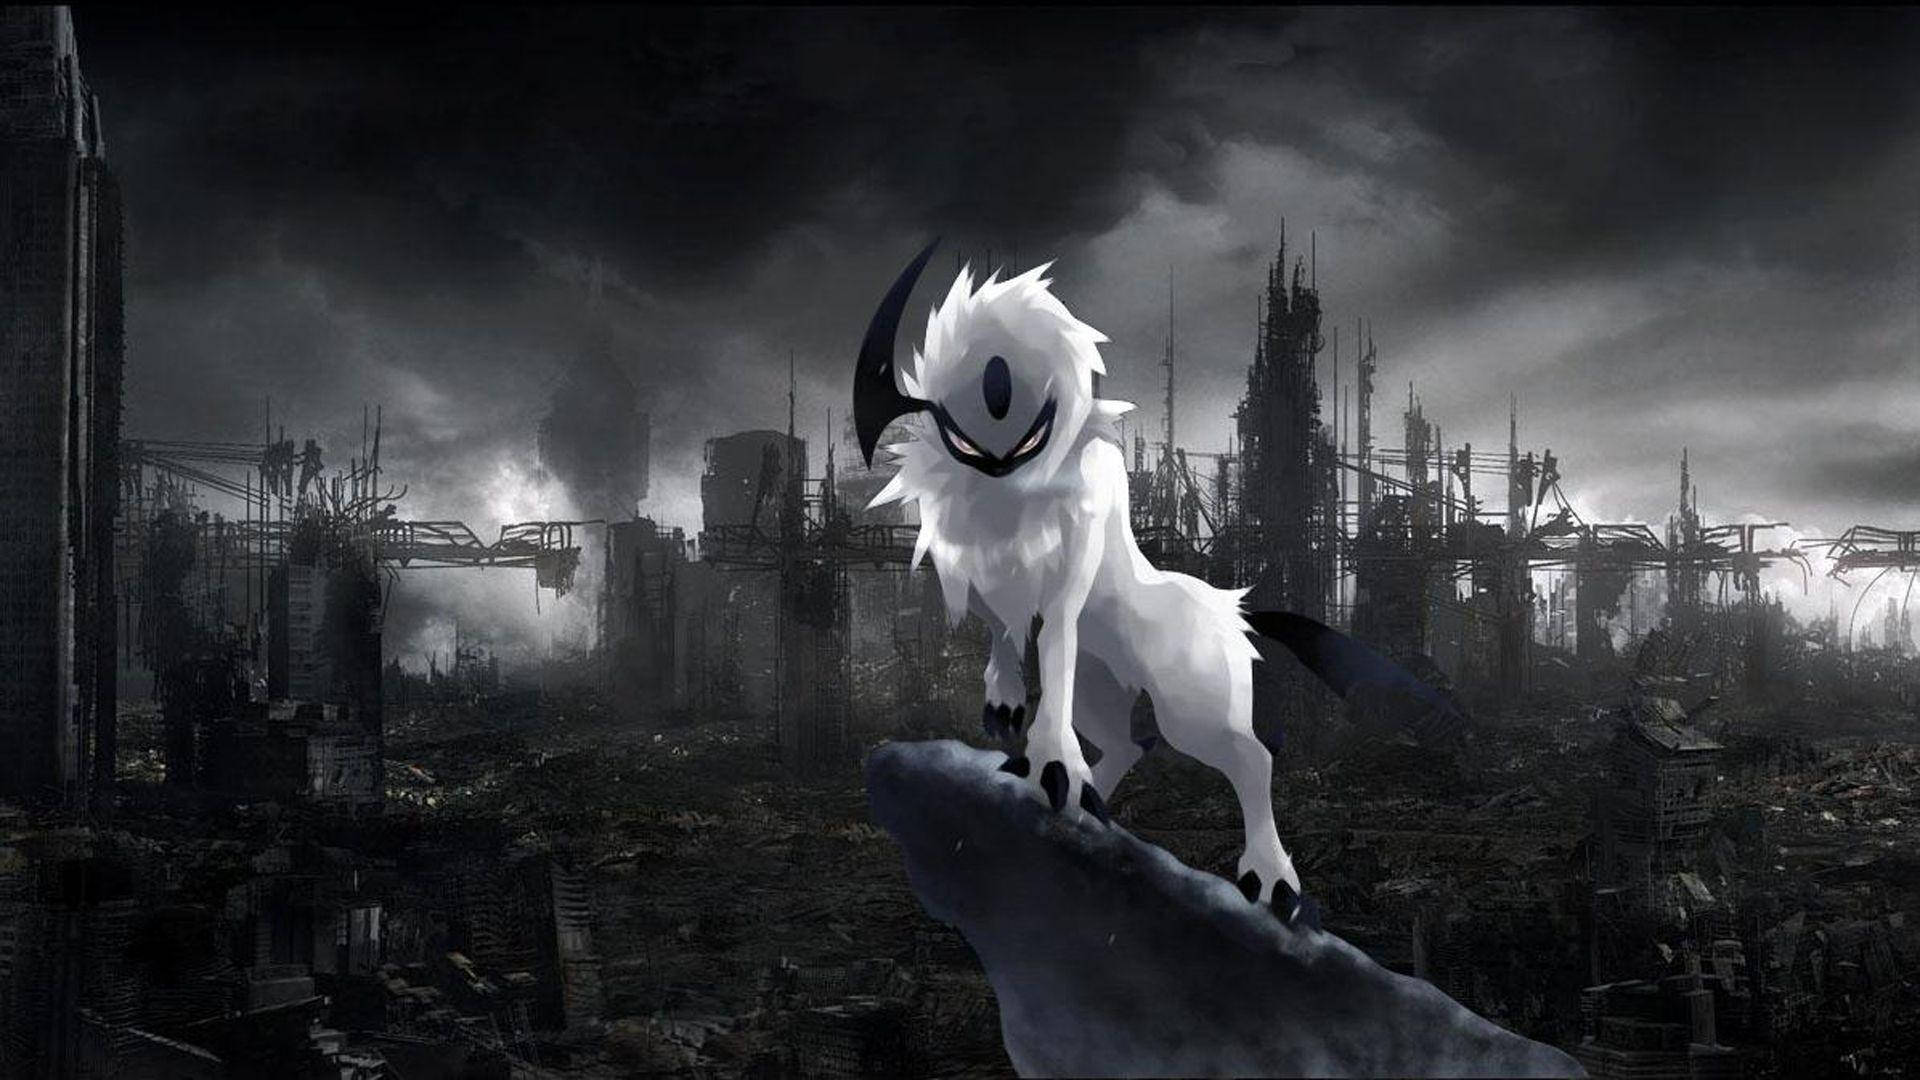 Caption: Darkrai, The Mysterious Dark Pokémon In Midnight Aura Wallpaper